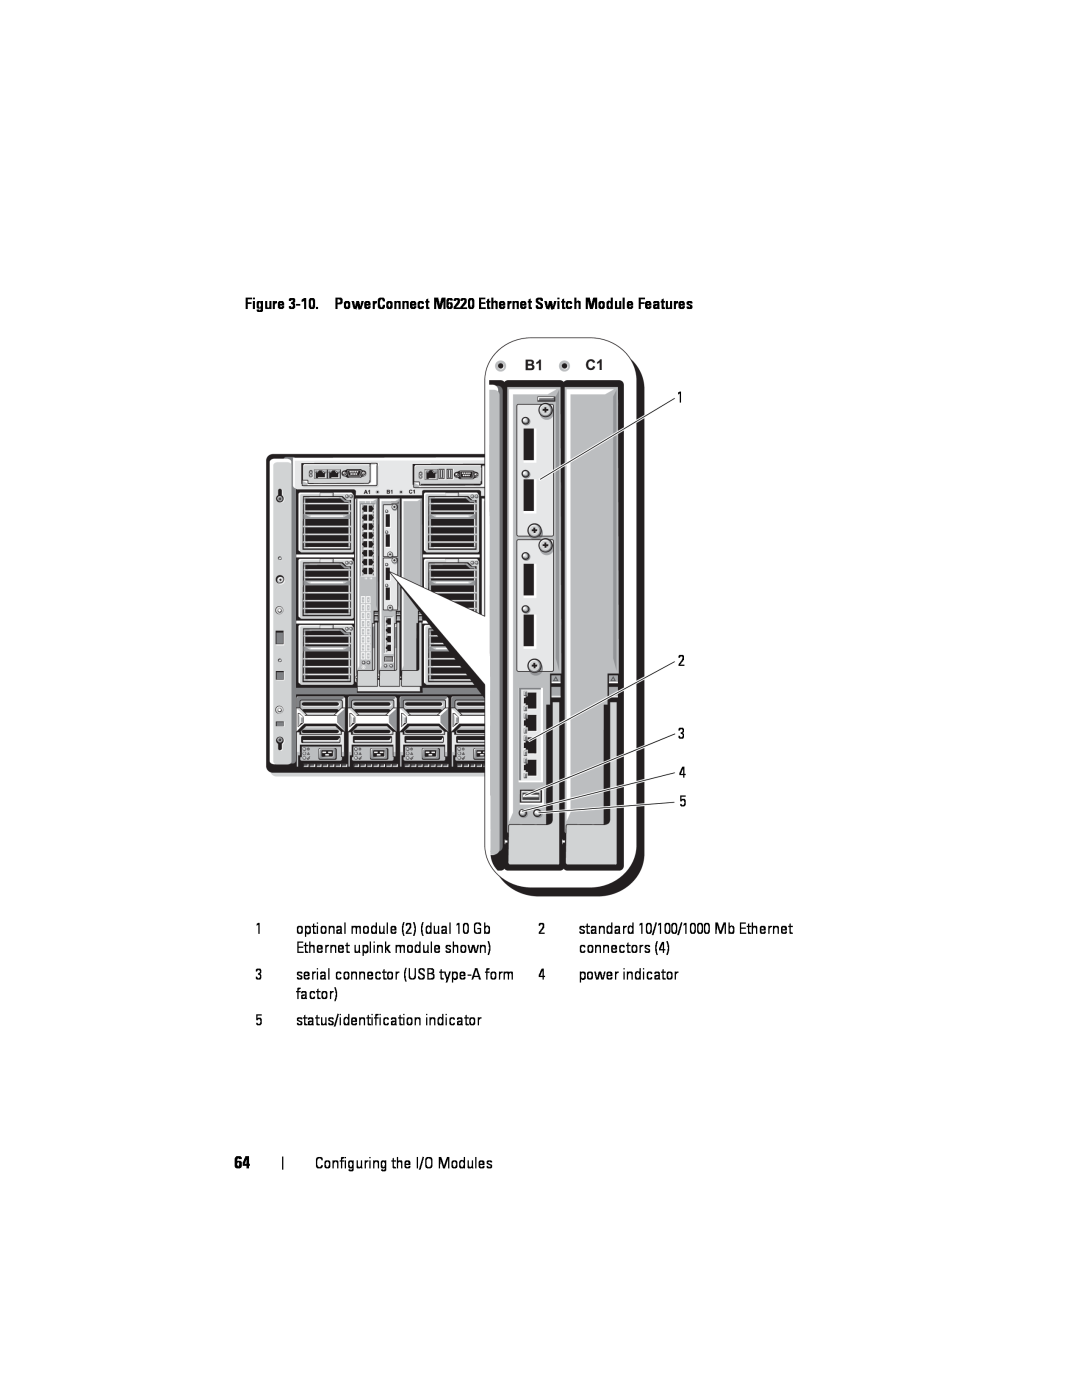 Dell M1000E manual 10. PowerConnect M6220 Ethernet Switch Module Features, optional module 2 dual 10 Gb, connectors, factor 